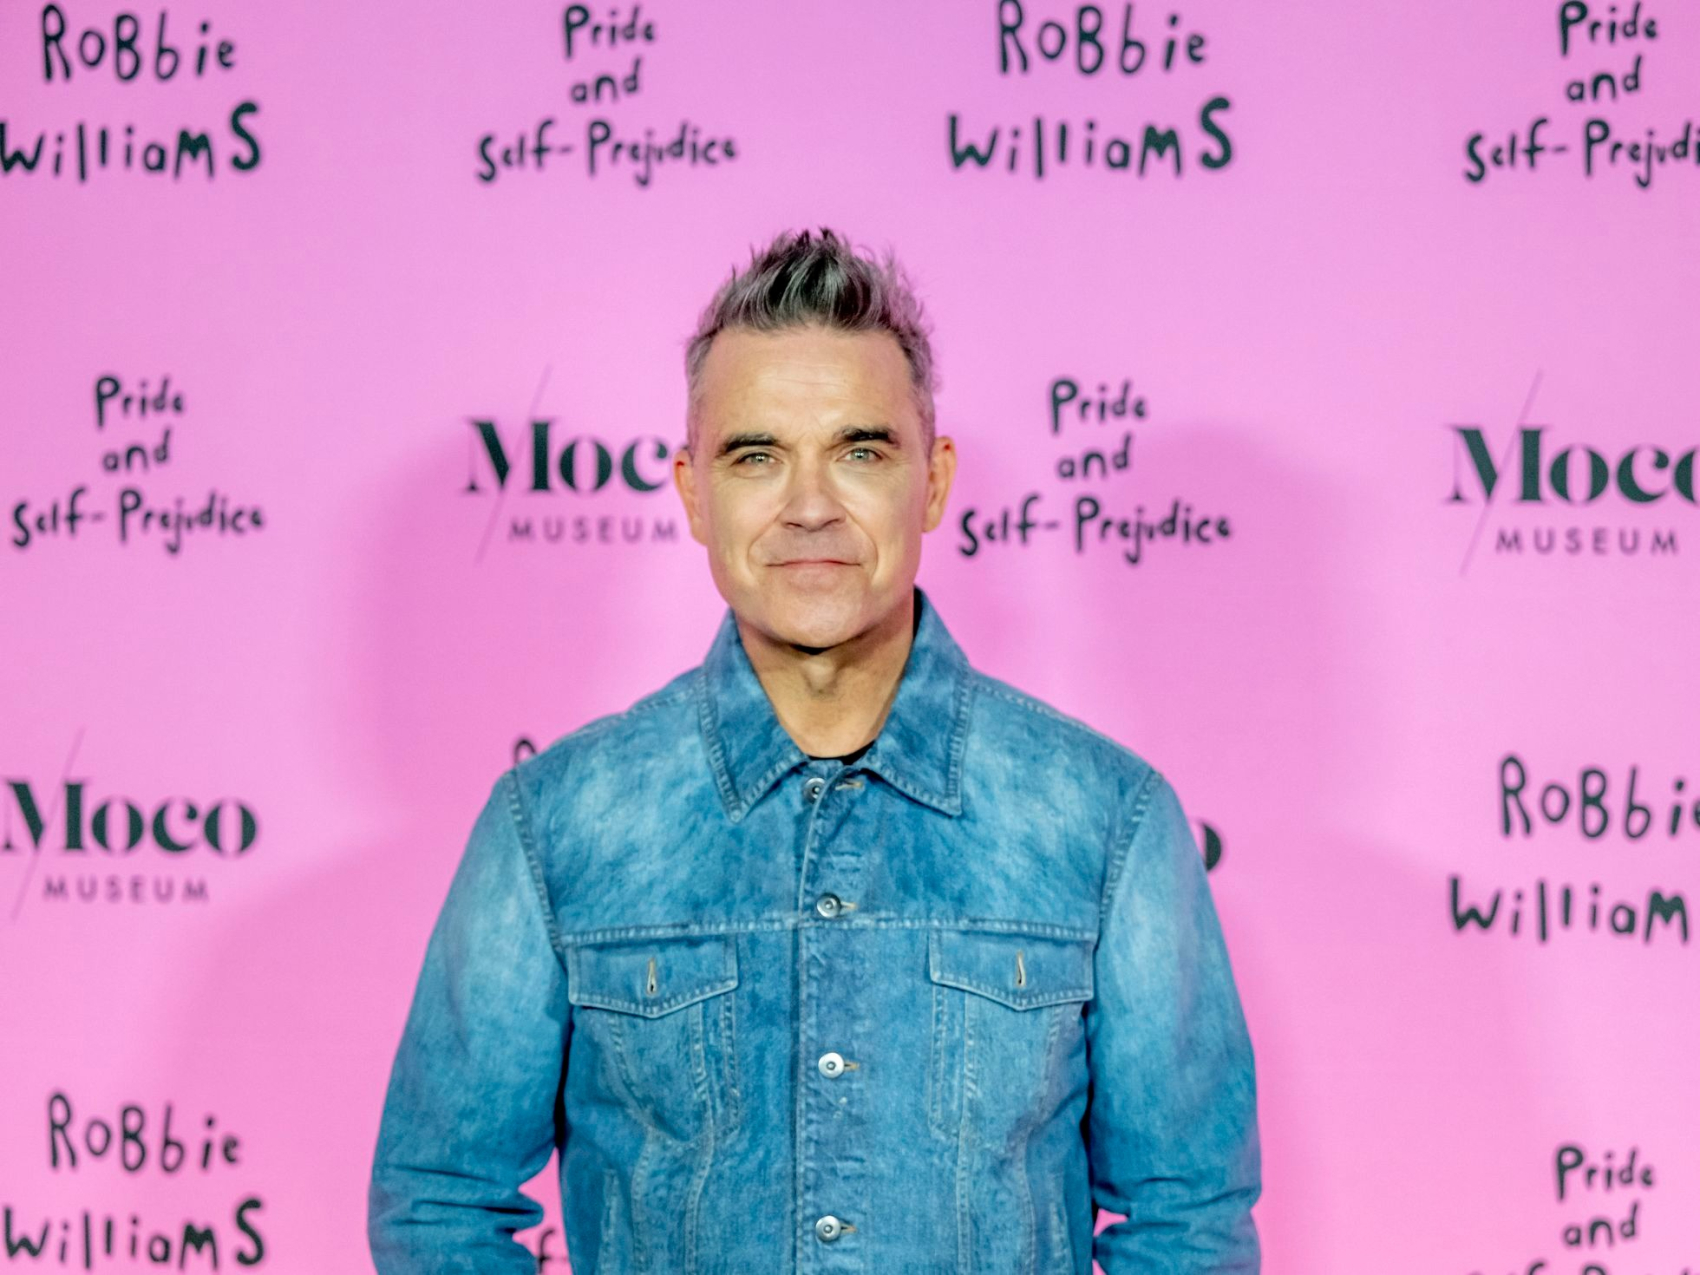 Robbie Williams an der Wand im Moco Museum